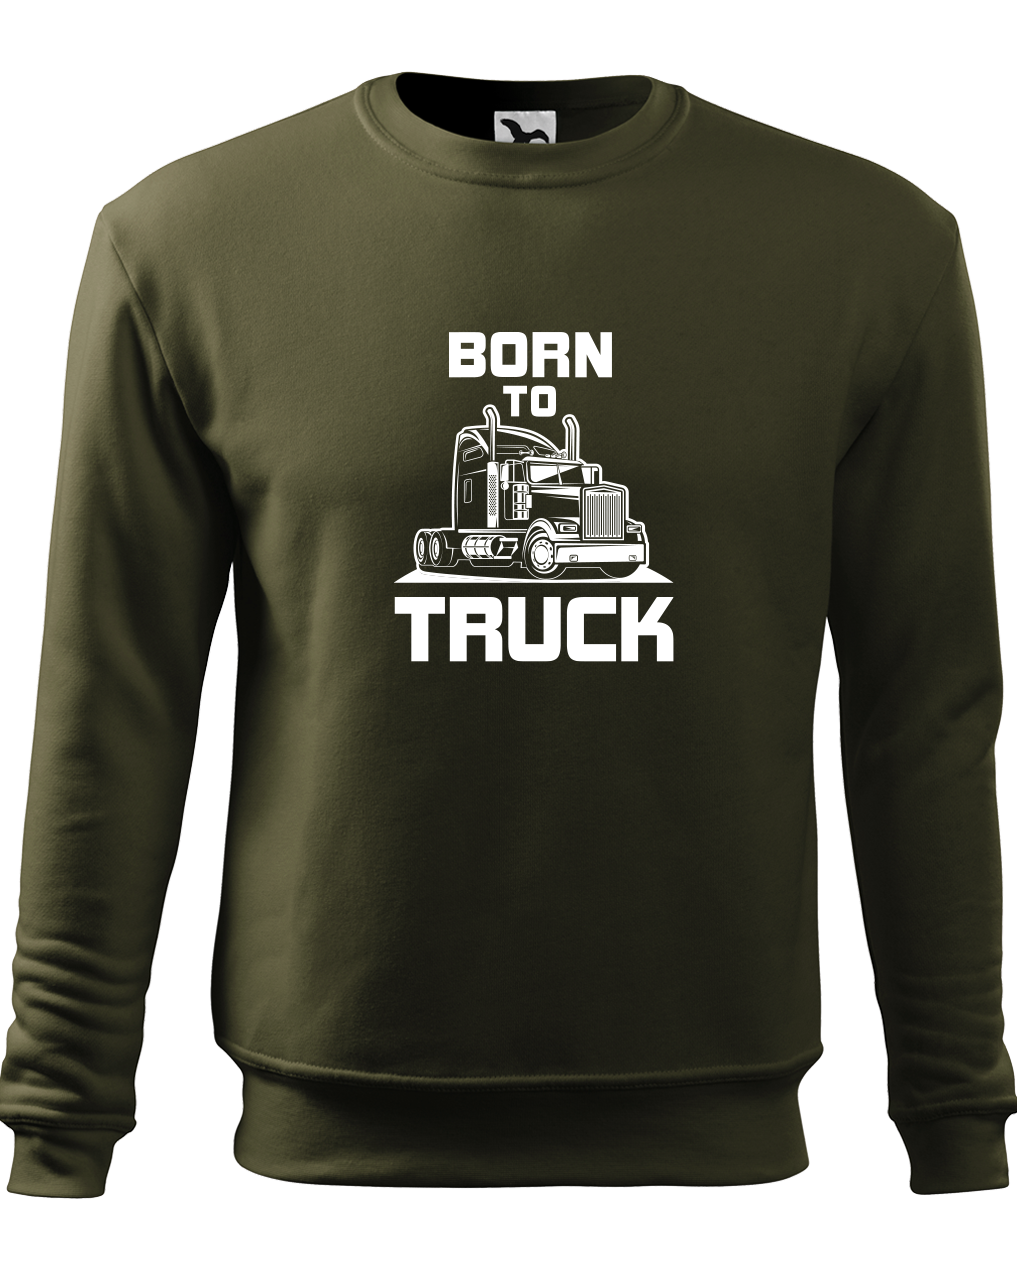 Mikina pro kamioňáka - Born to truck Velikost: S, Barva: Military